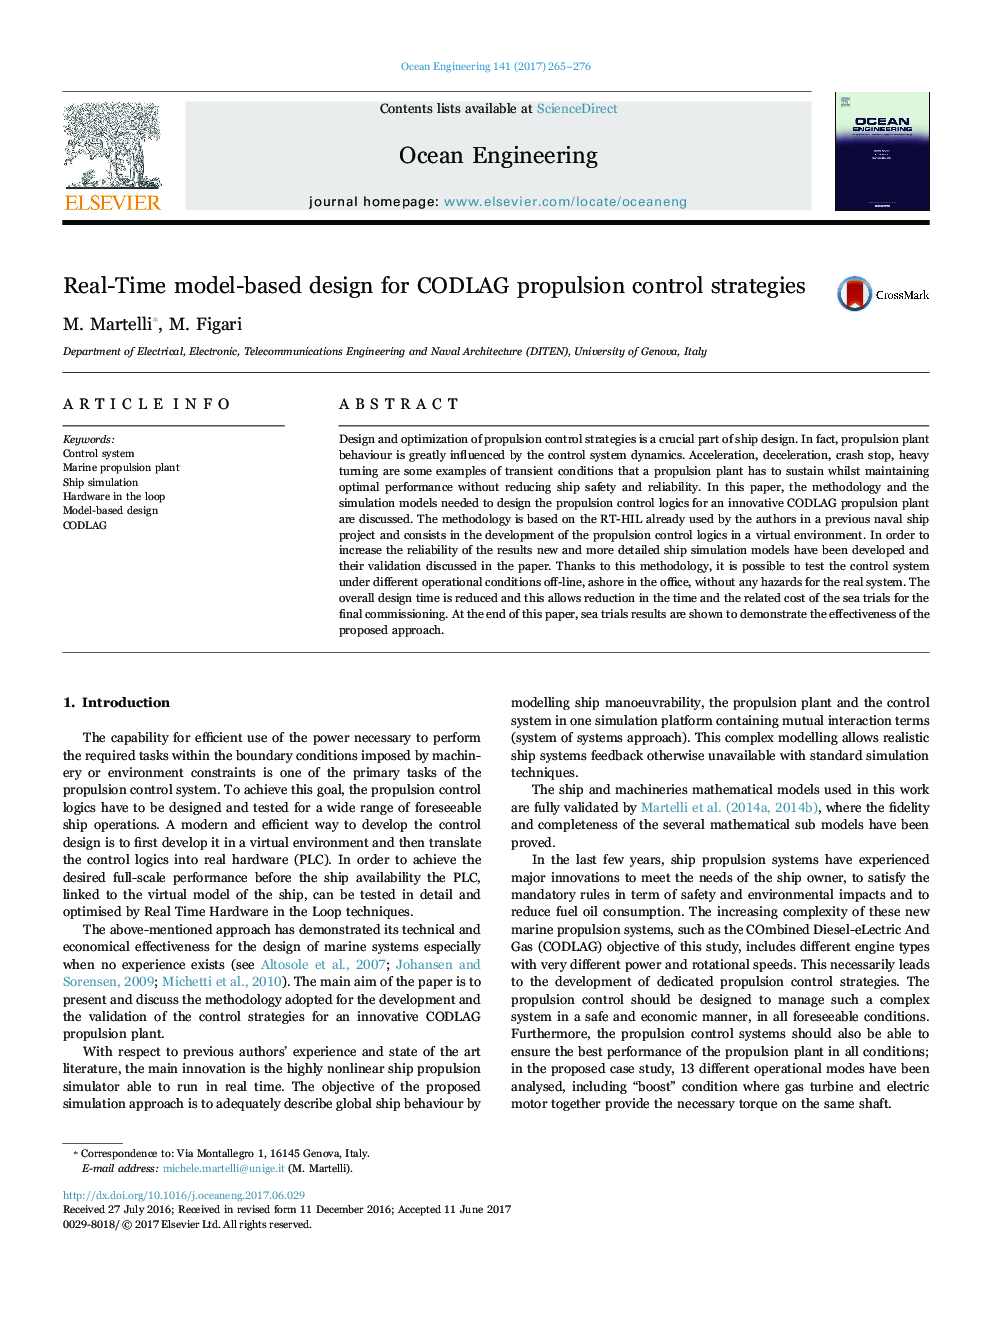 Real-Time model-based design for CODLAG propulsion control strategies